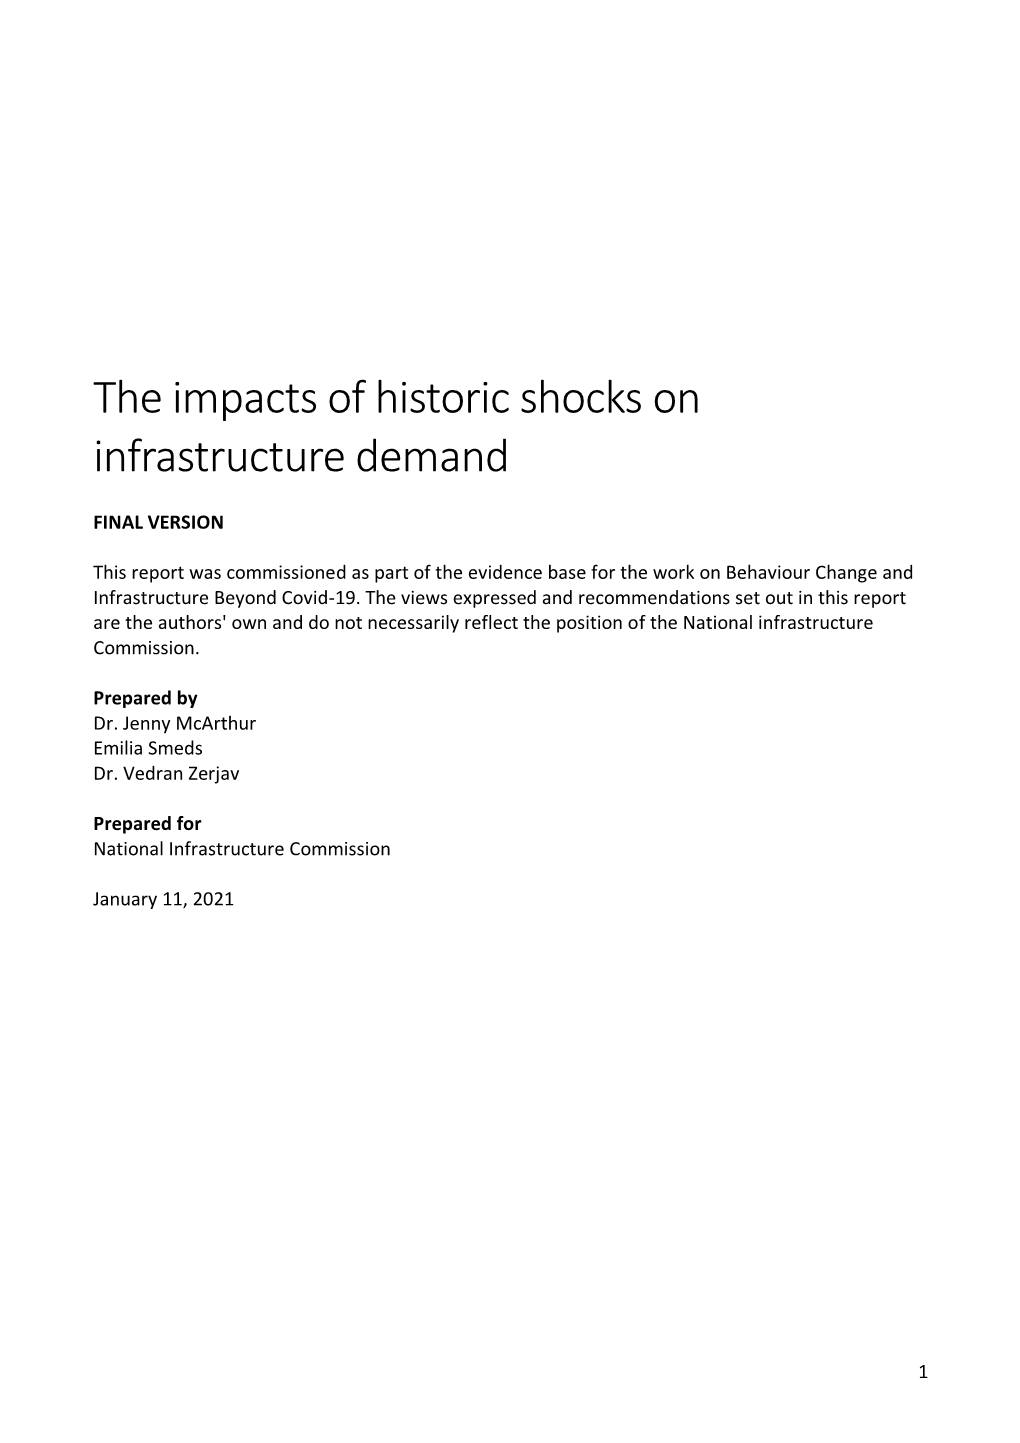 Historic Shocks Report